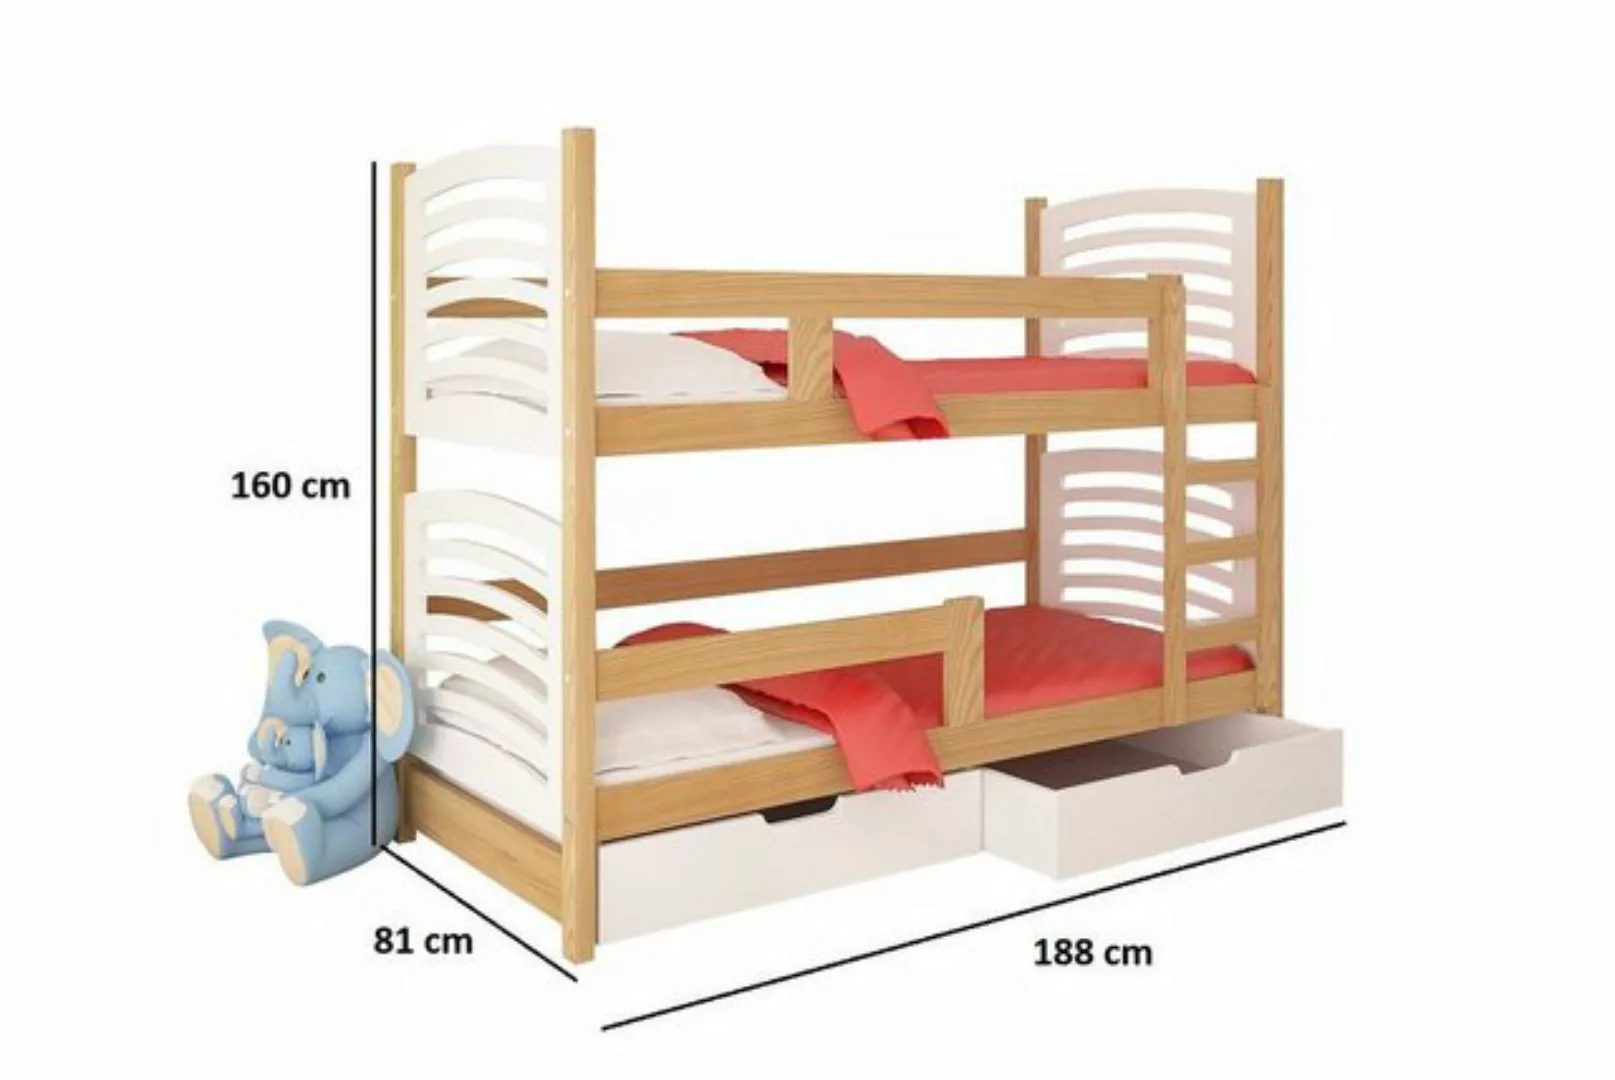 99rooms Kinderbett Bob (Kinderbett, Bett), 75x180 cm, mit Bettkasten, Kiefe günstig online kaufen